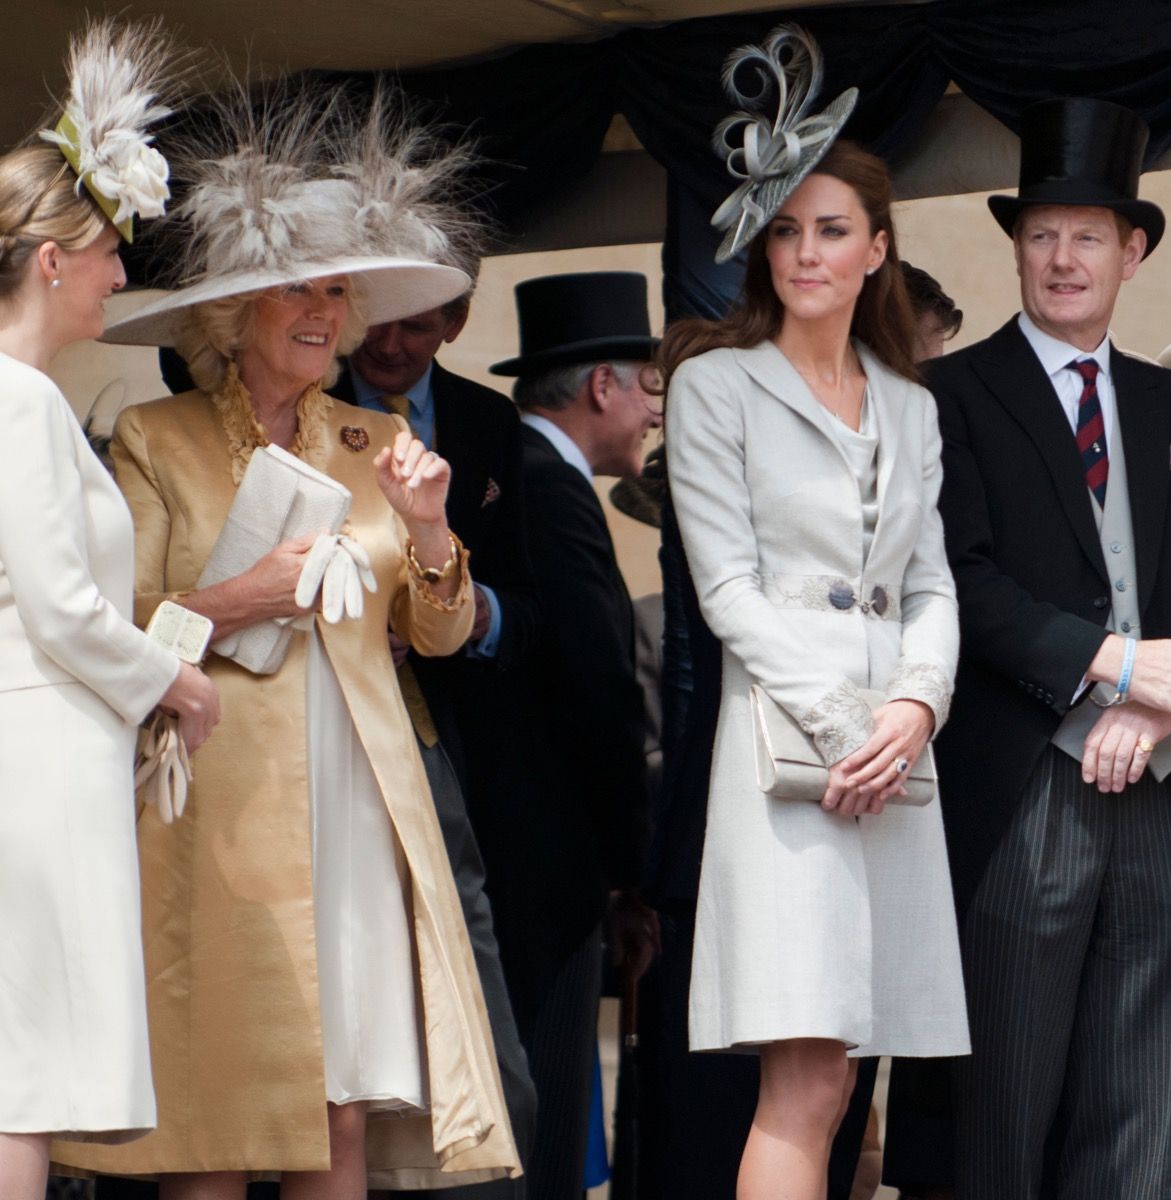 C4F523コーンウォール公爵夫人、ケンブリッジ公爵夫人とソフィー公爵夫人、2011年4月のガーターデーでのウェセックス伯爵夫人、ウィンザー